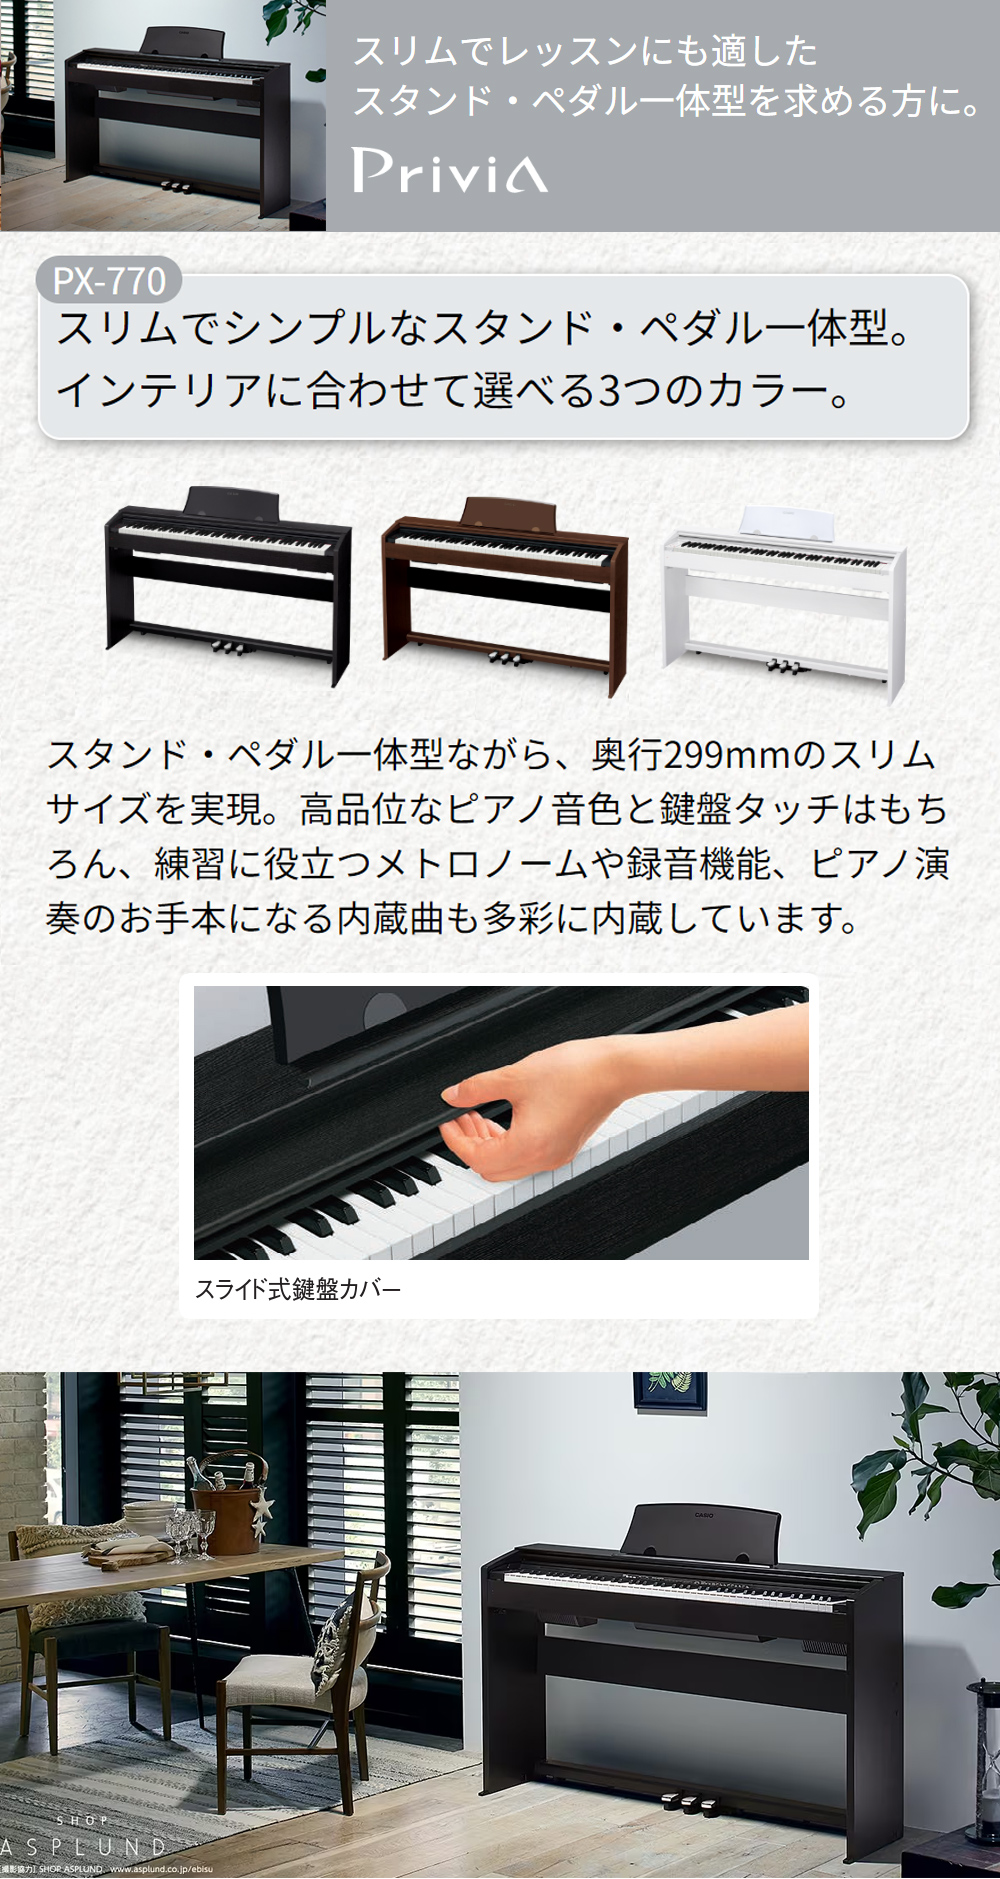 CASIO PX-770WE 同色高低イスセット 電子ピアノ 88鍵 カシオ PX770 